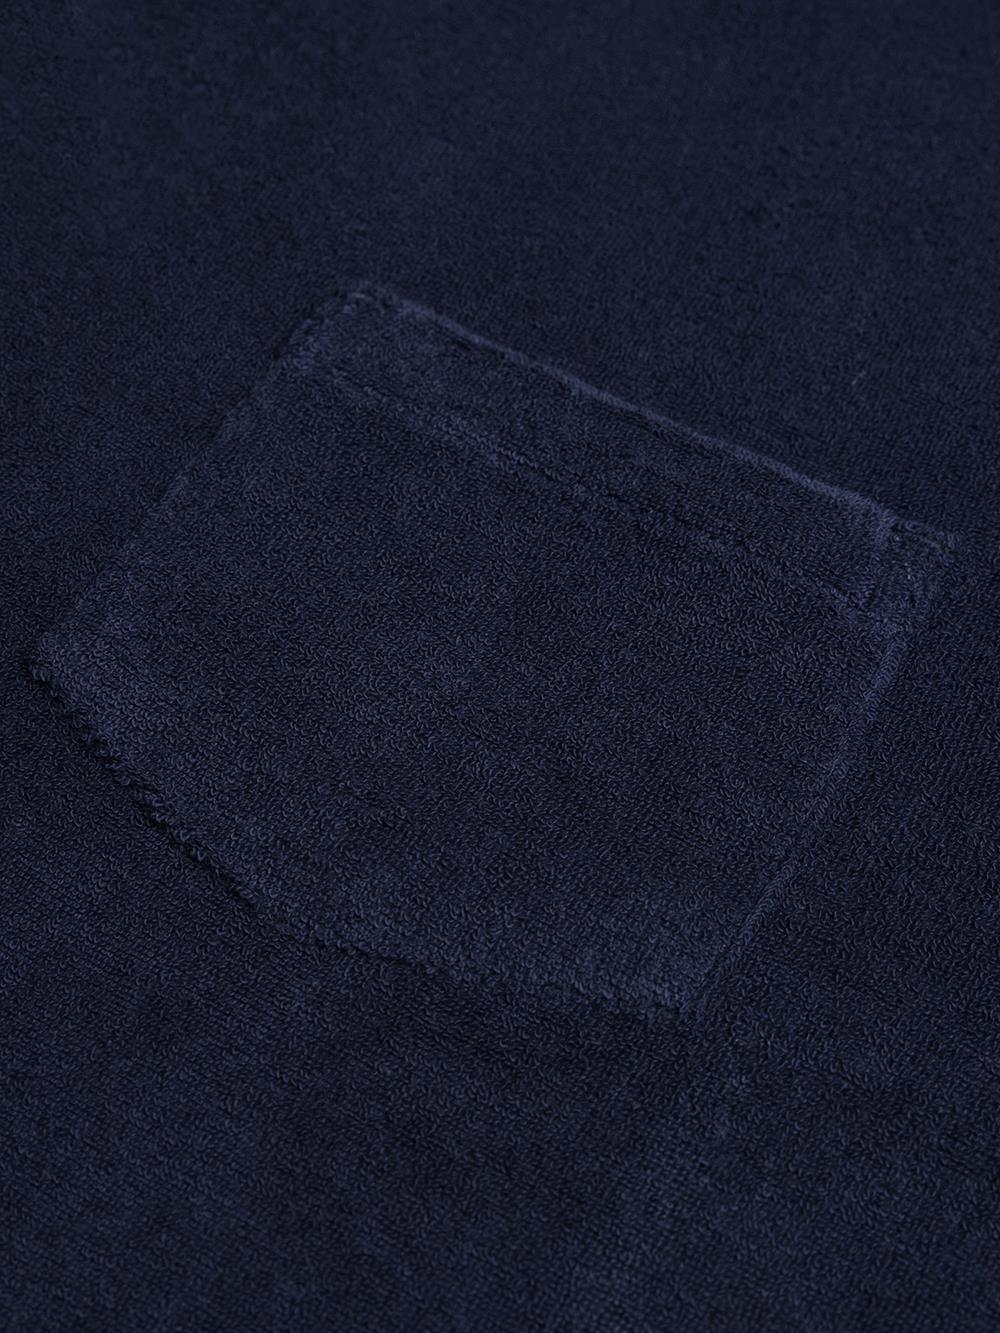 Camisa de rizo azul marino - Manga corta